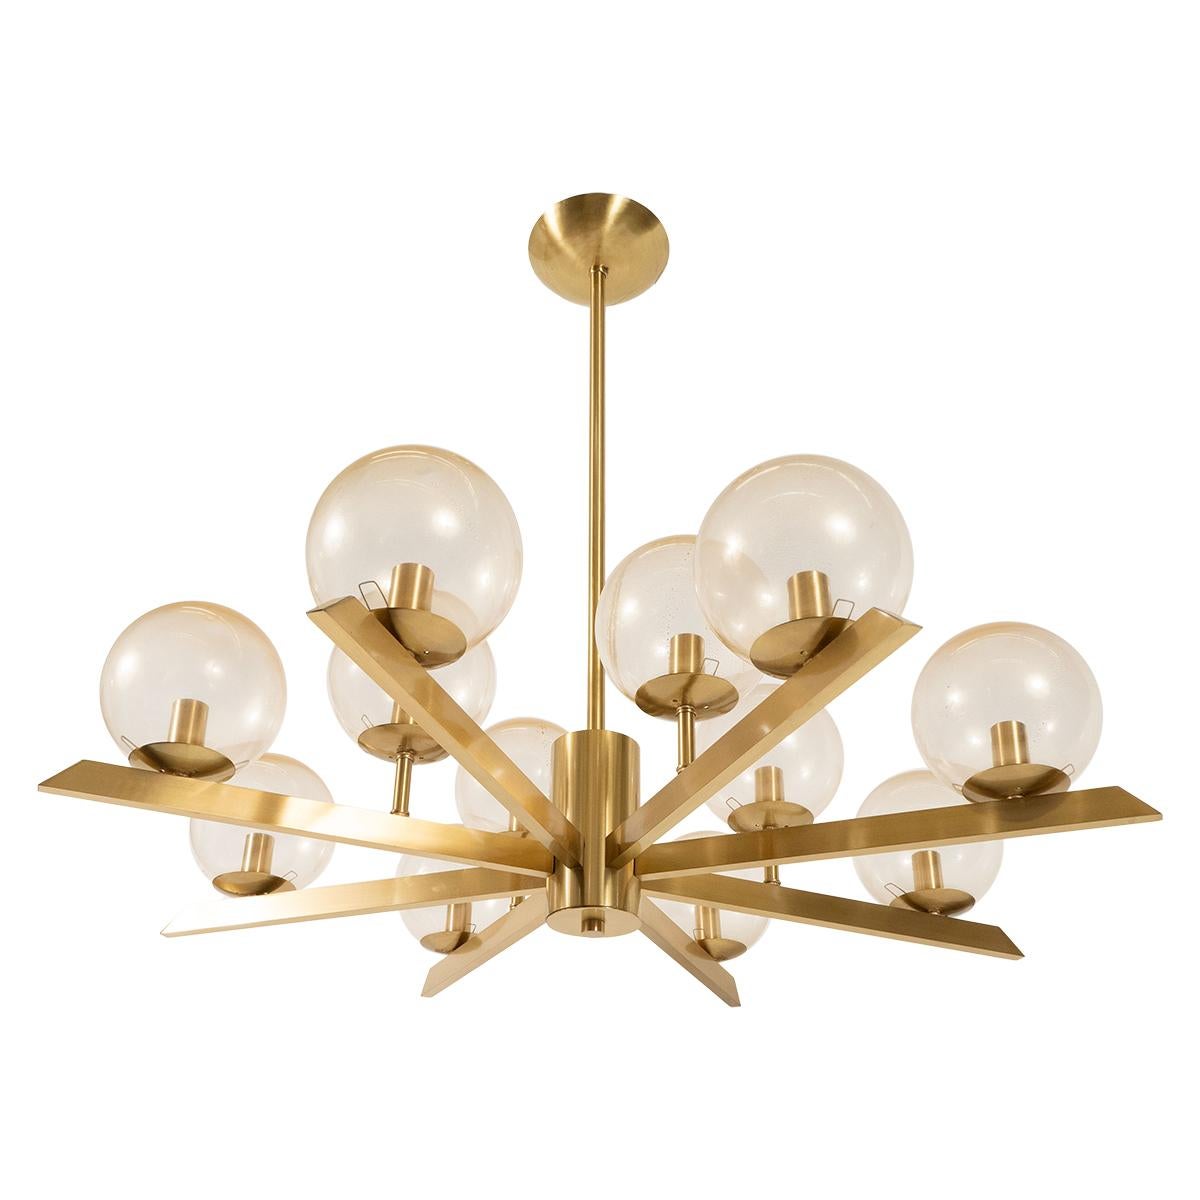 Brass sunburst style chandelier featuring clear glass globes with gold flecks.